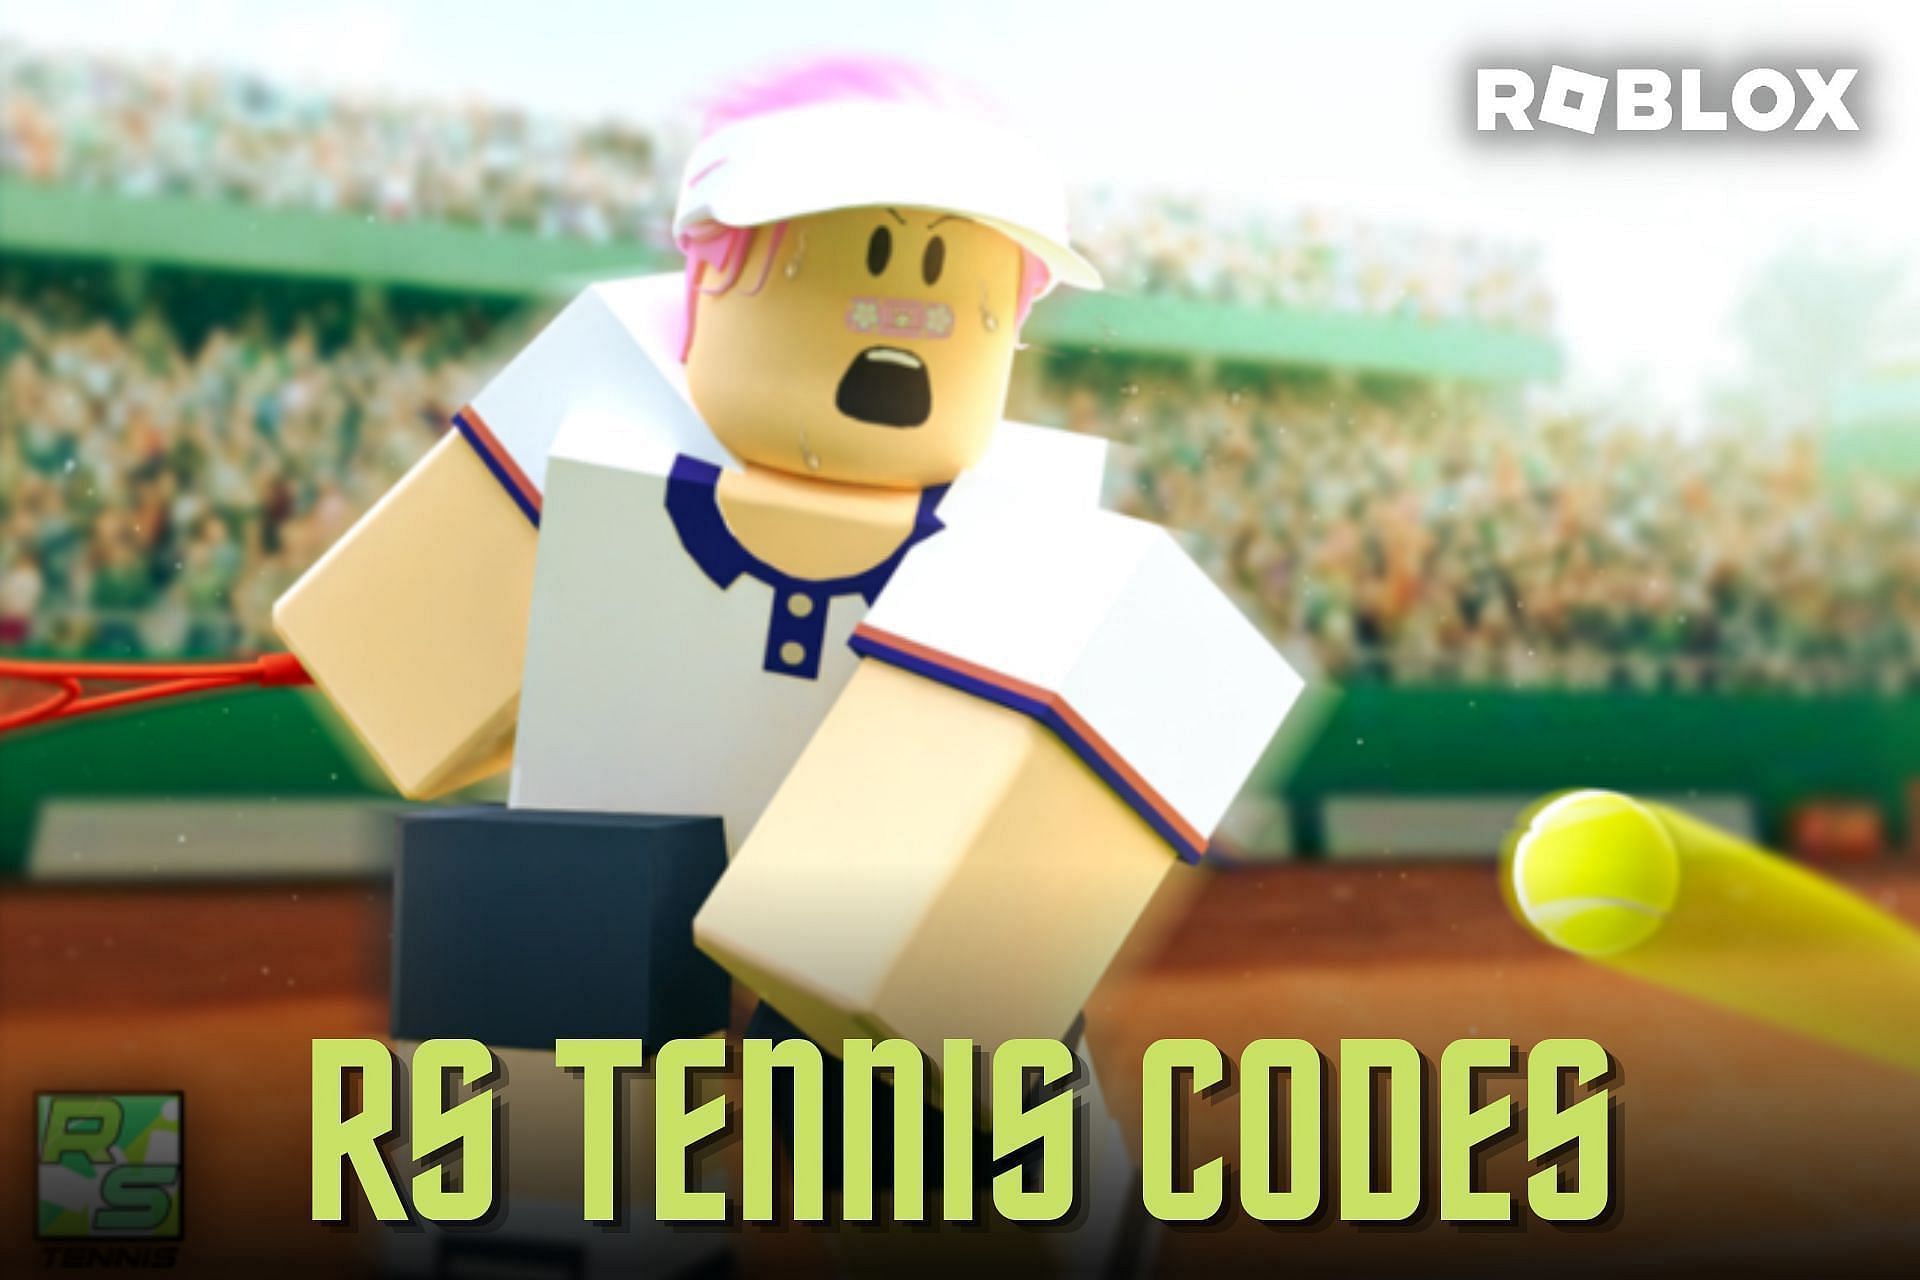 RS Tennis codes (Image via Sportskeeda)